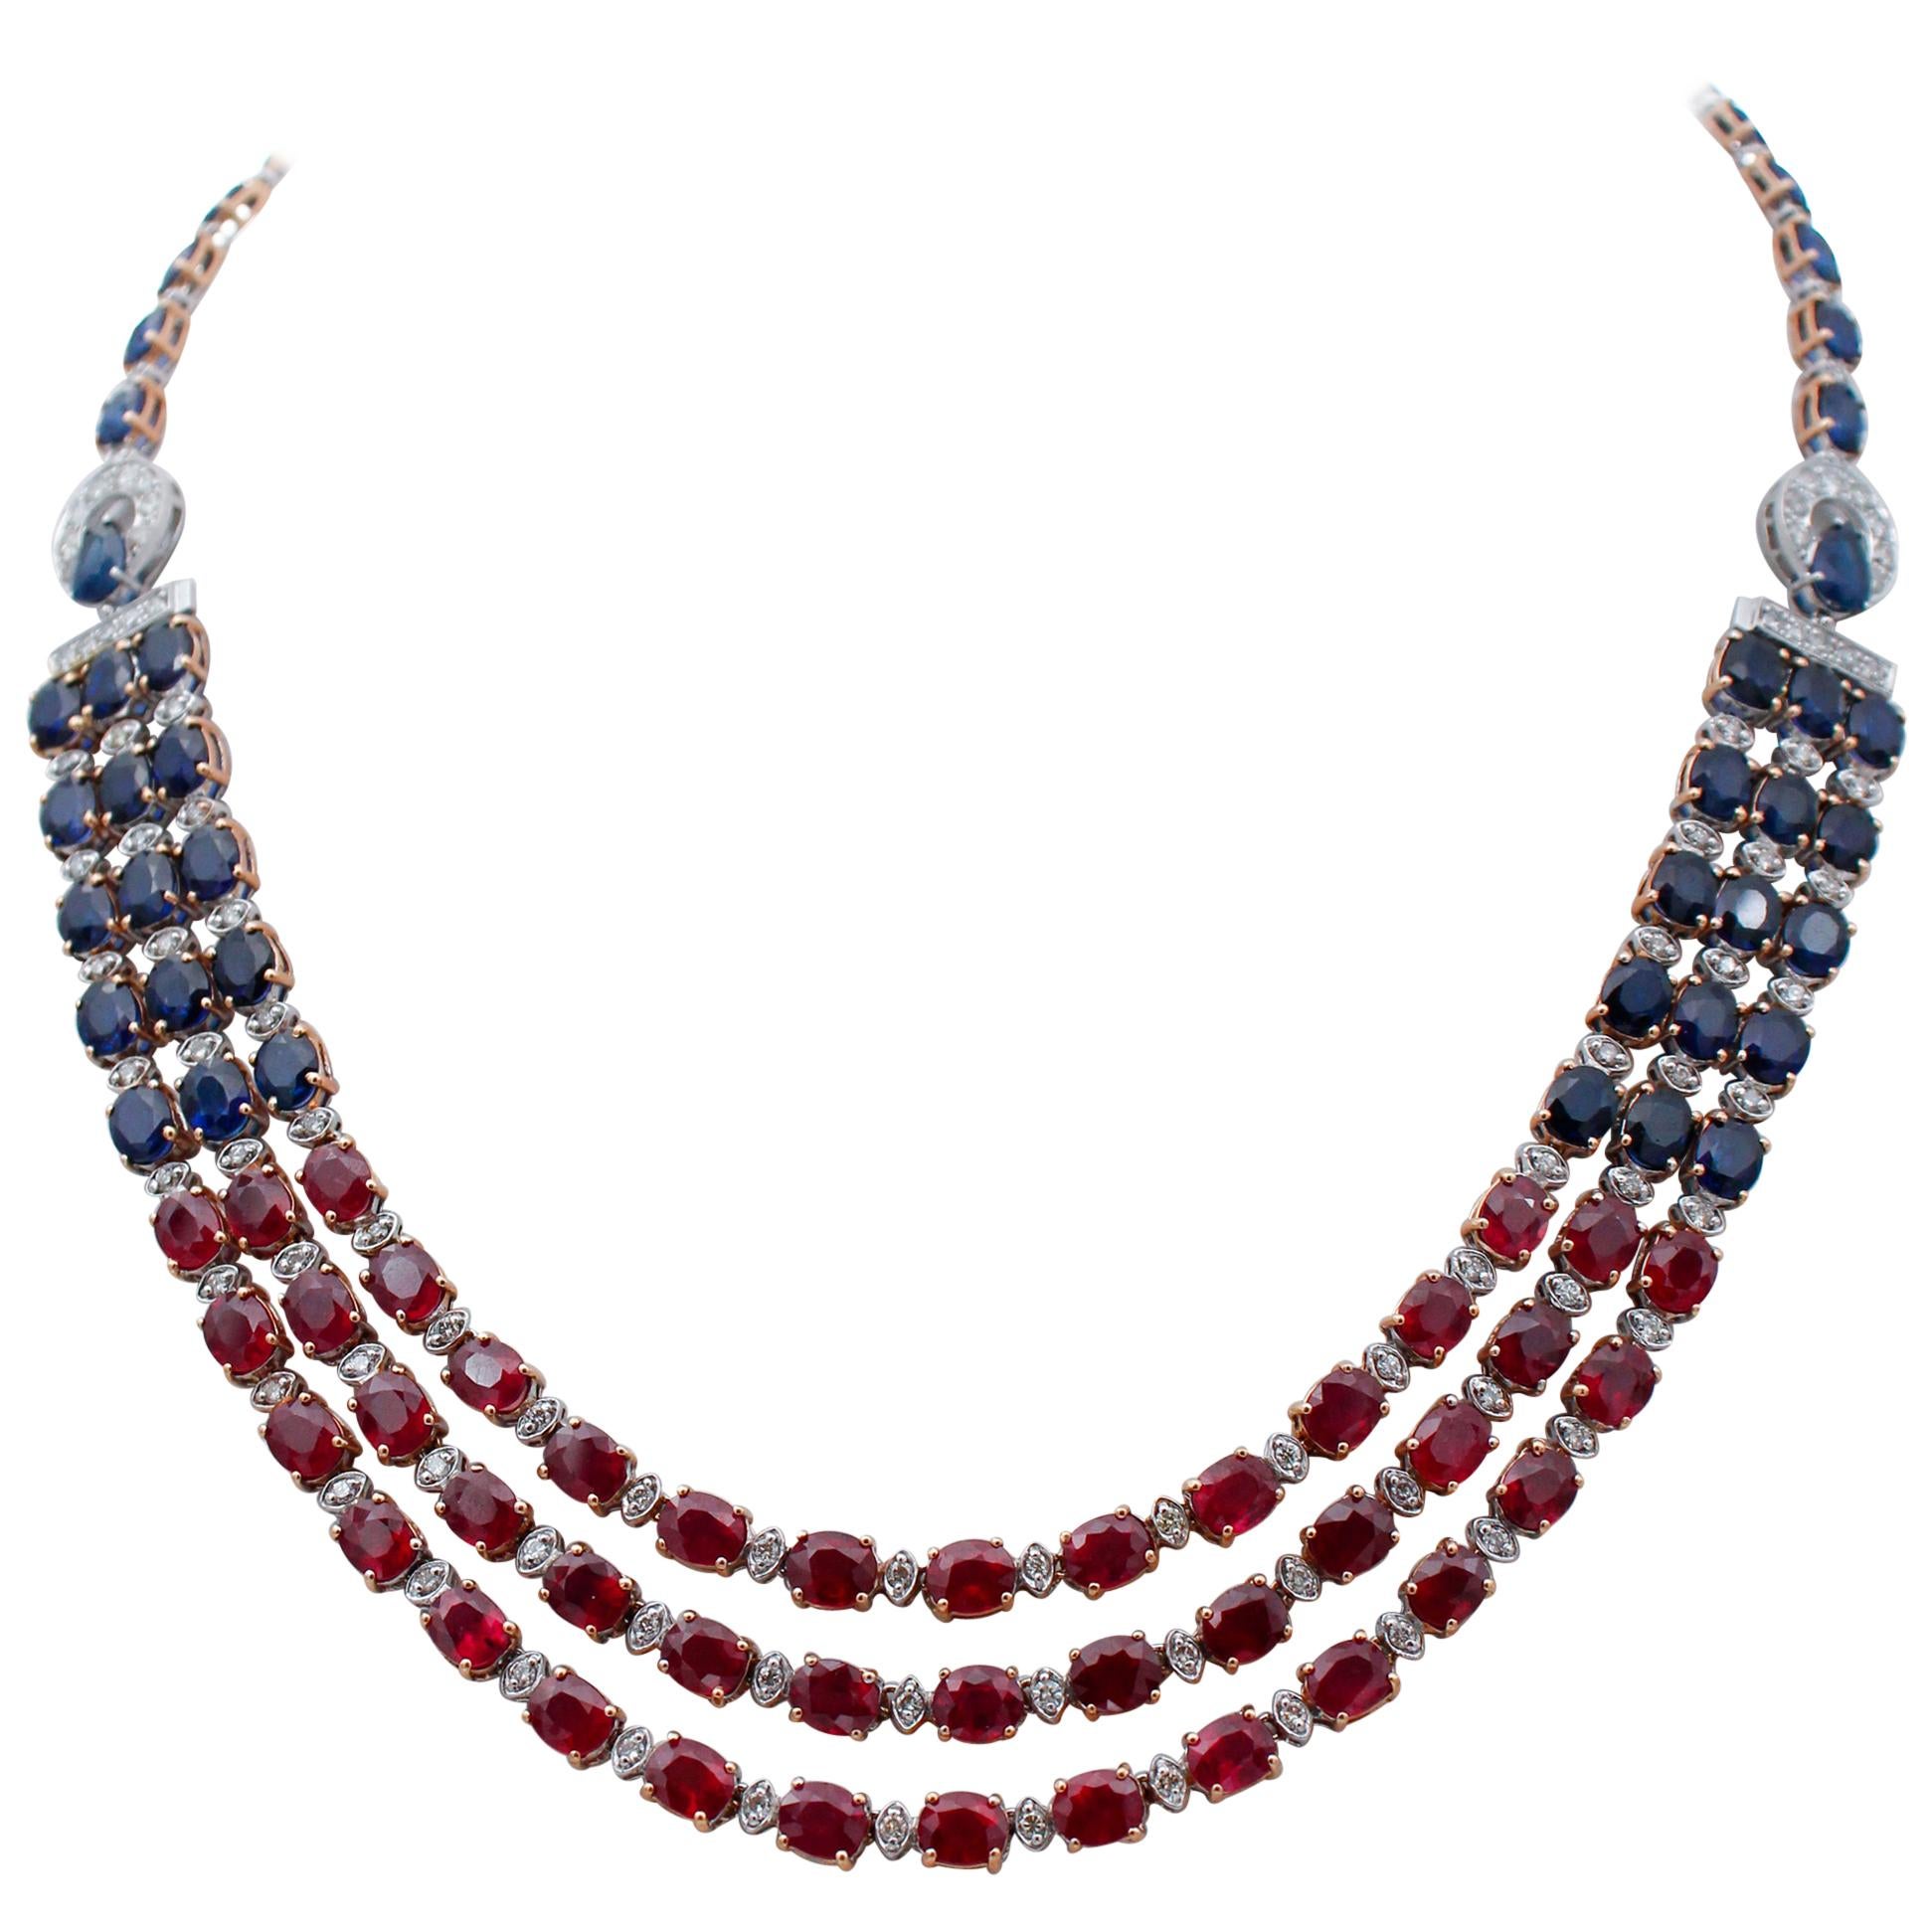 Rubies, Blue Sapphires, Diamonds, 14 Karat White and Rose Necklace